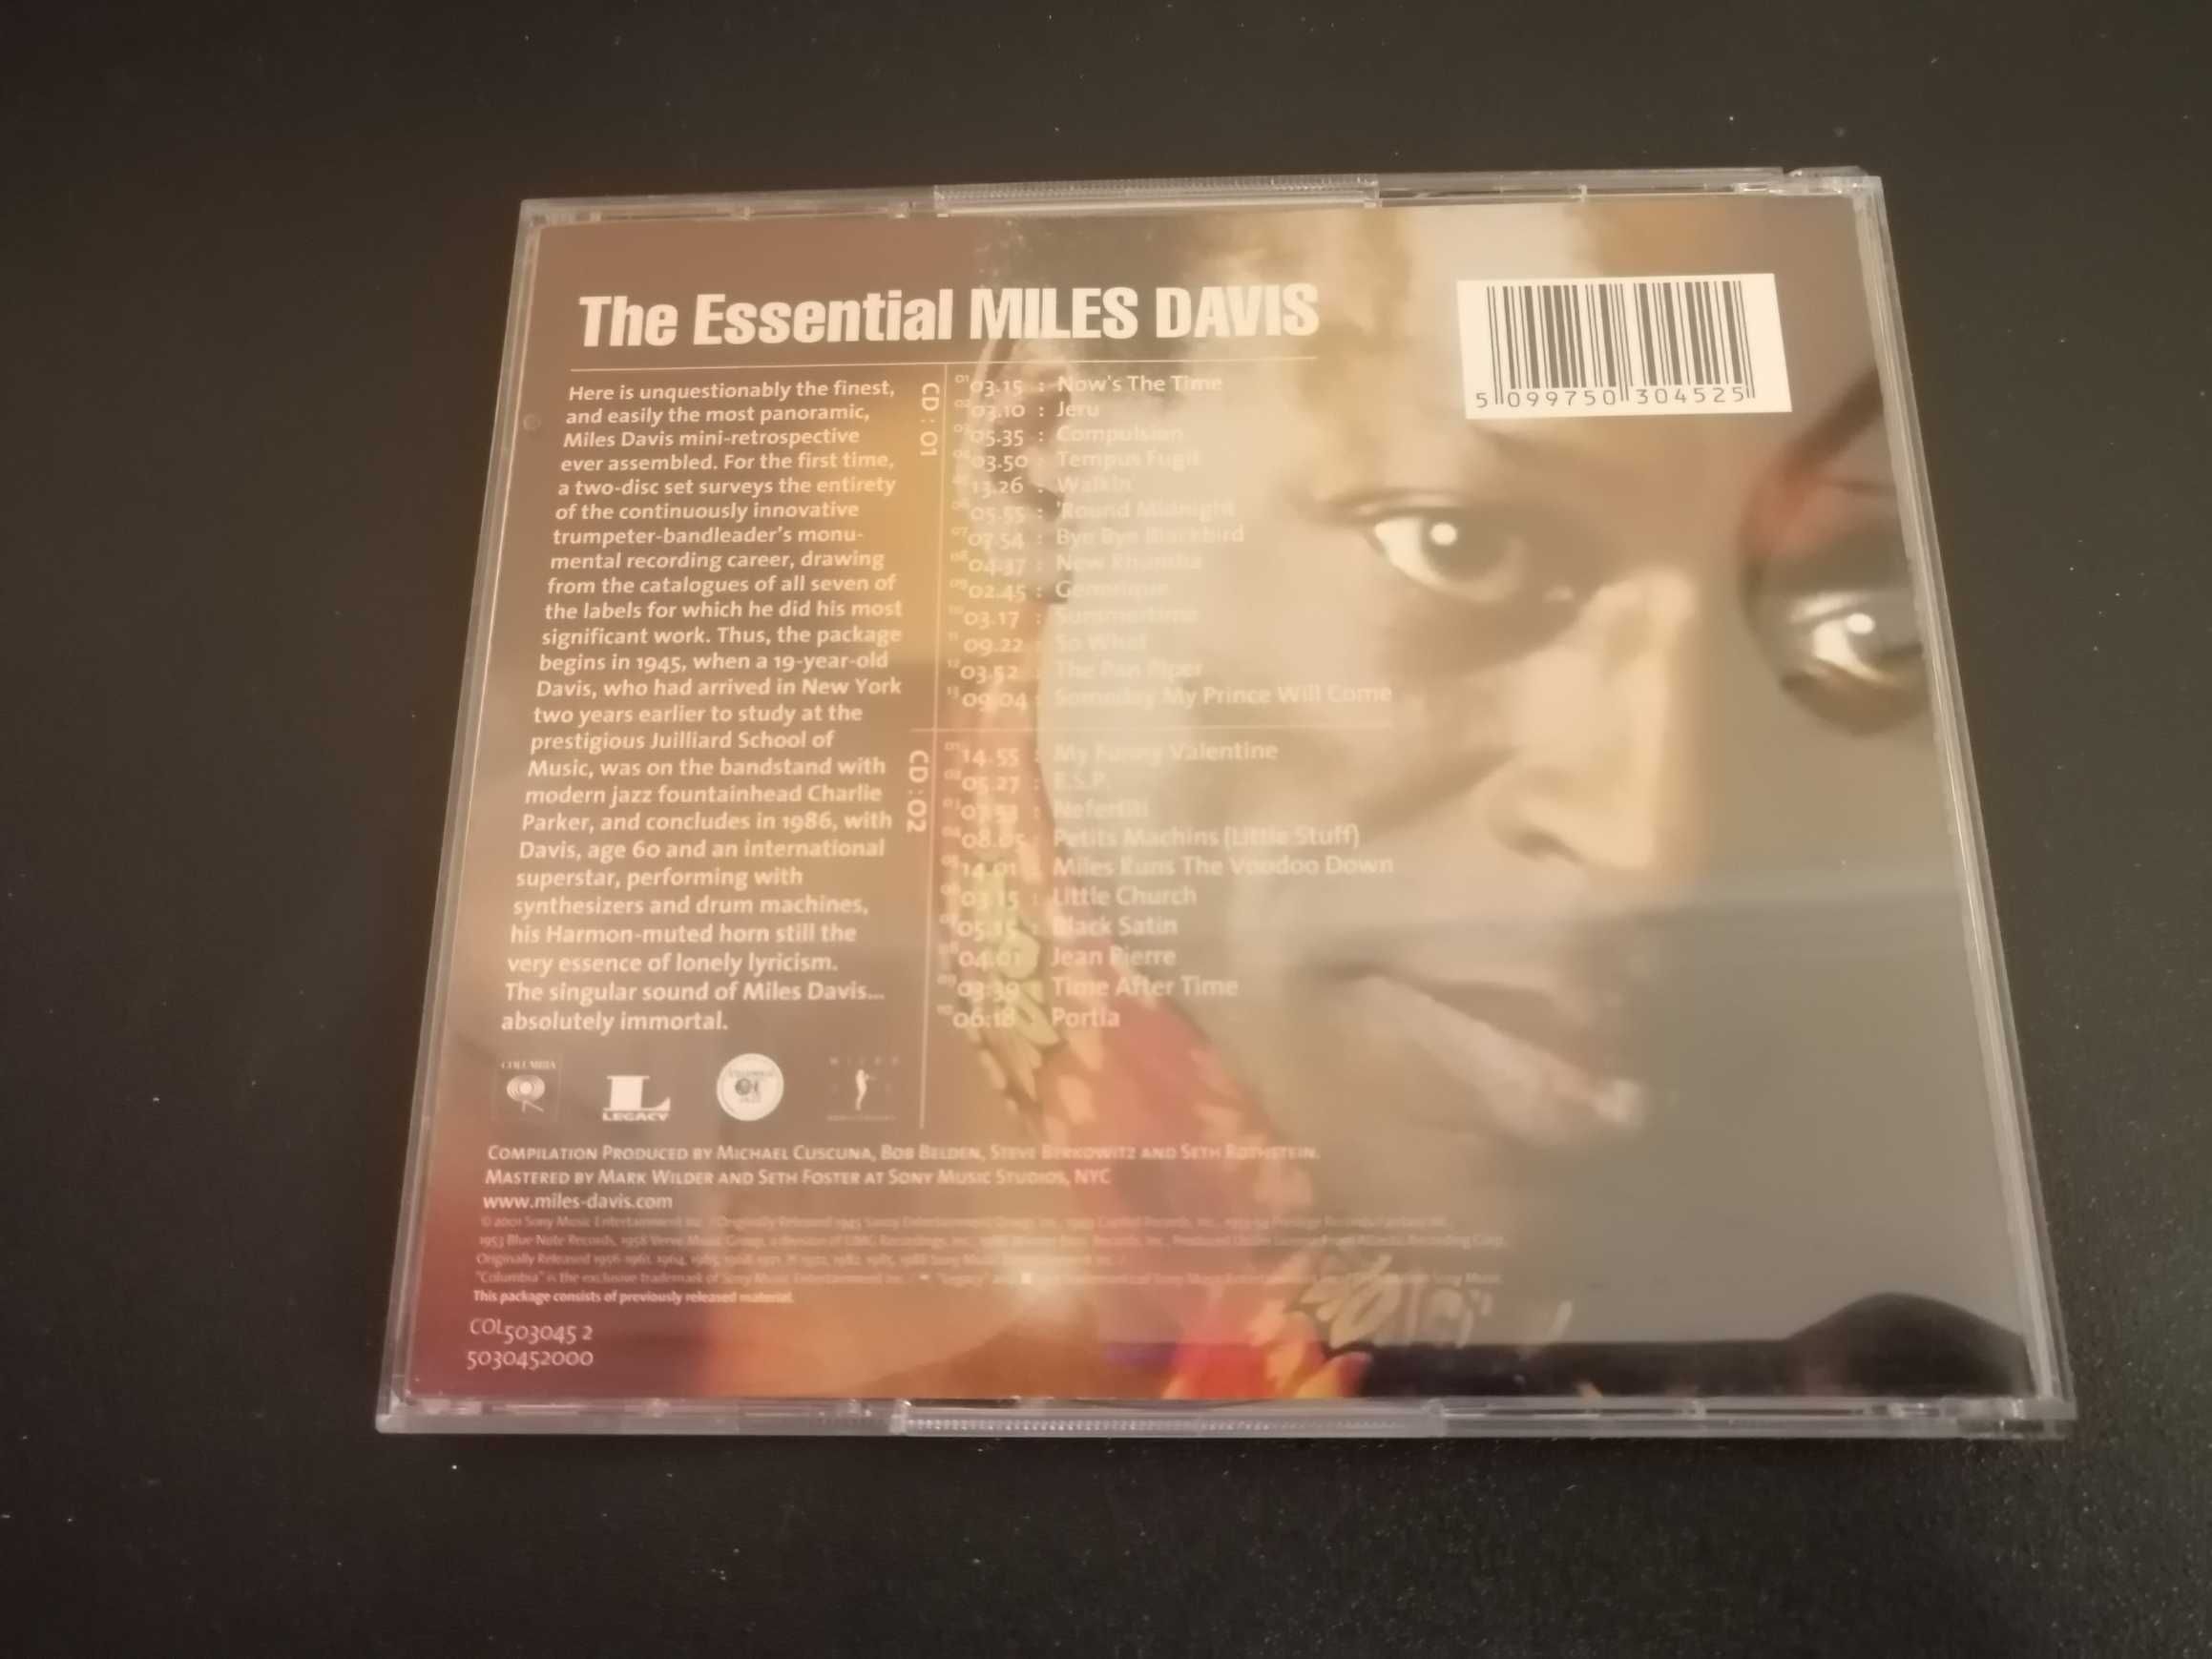 CD Duplo Miles Davis "The Essential" - Excelente estado